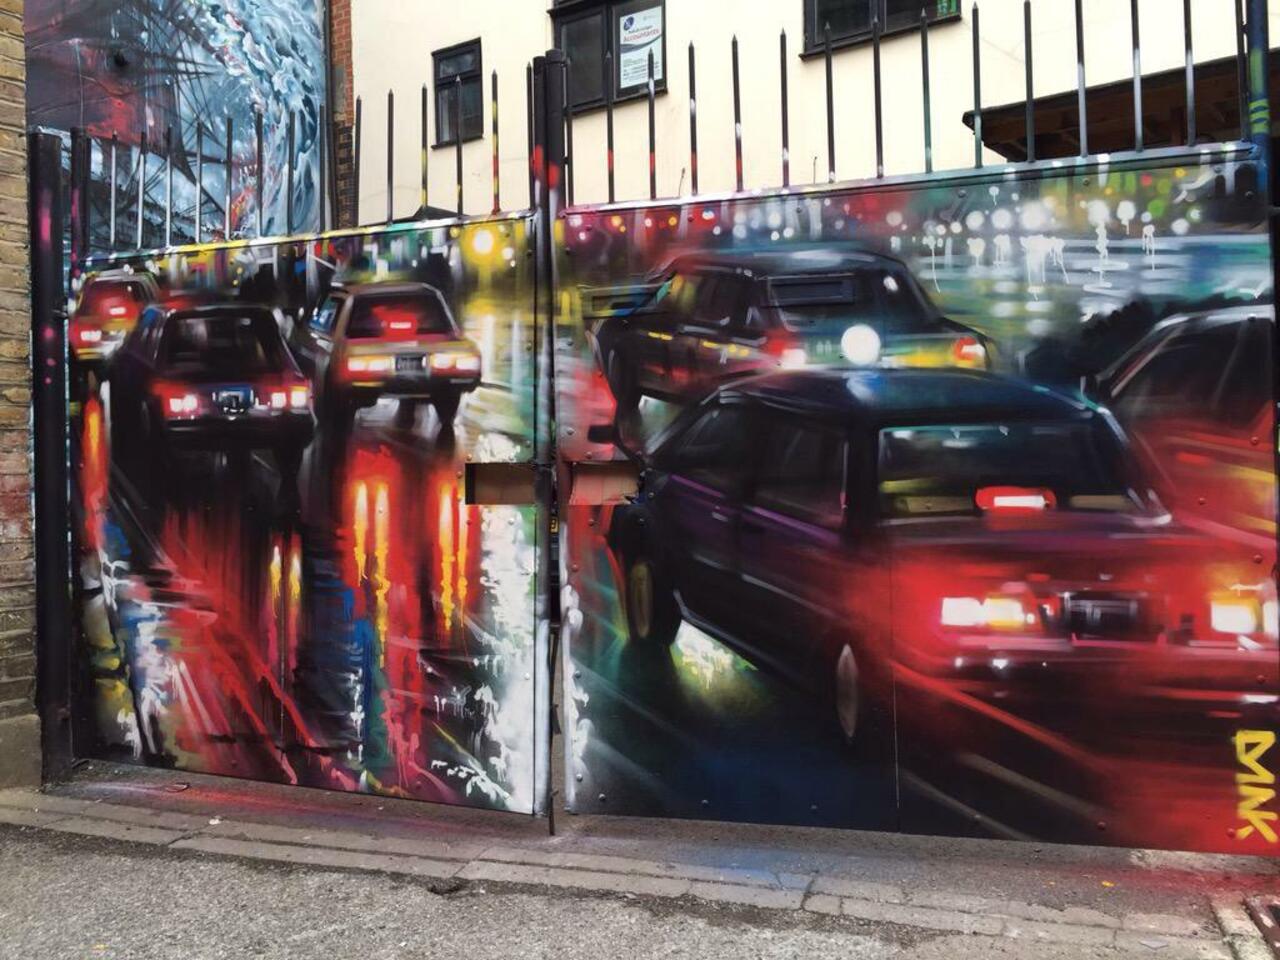 New Street Art by DanKitchener in Brick Lane London 

#art #graffiti #mural #streetart http://t.co/841TgqPdbZ